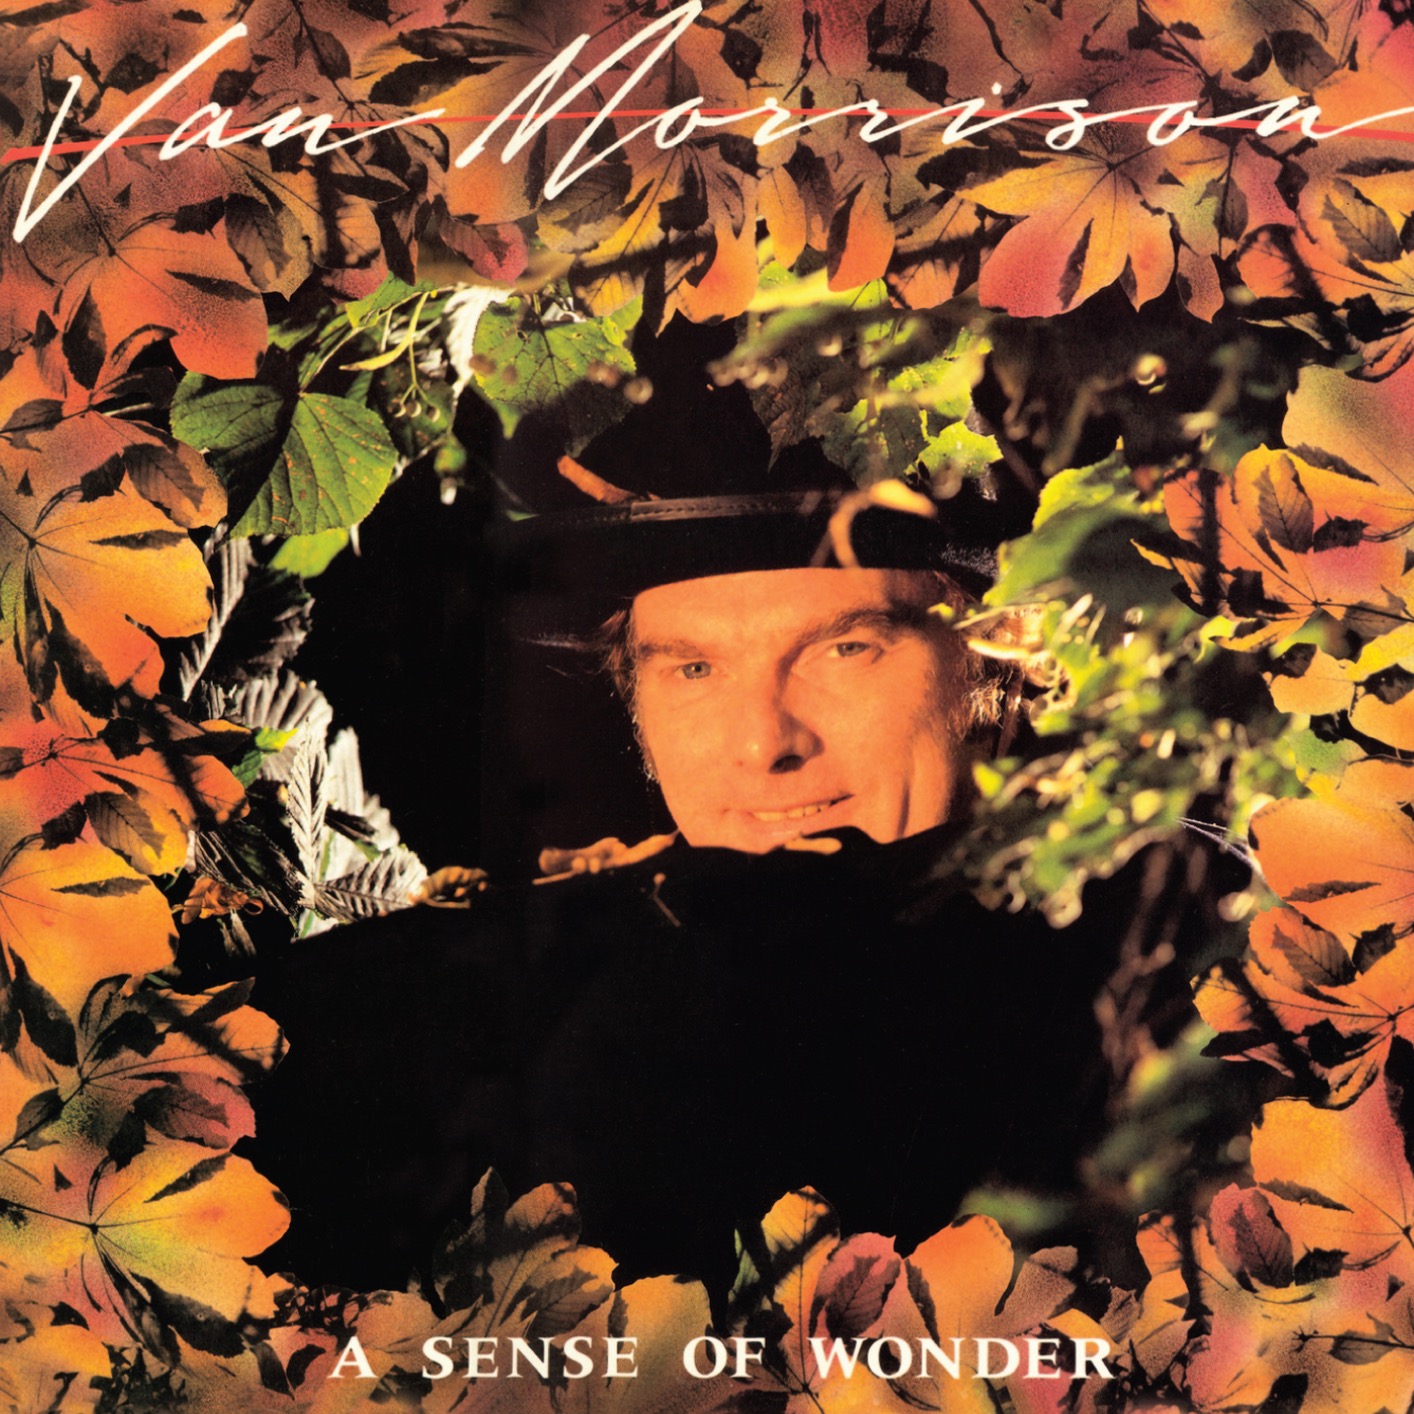 Van Morrison - A Sense of Wonder (Remastered) (1985/2020) [FLAC 24bit/96kHz]